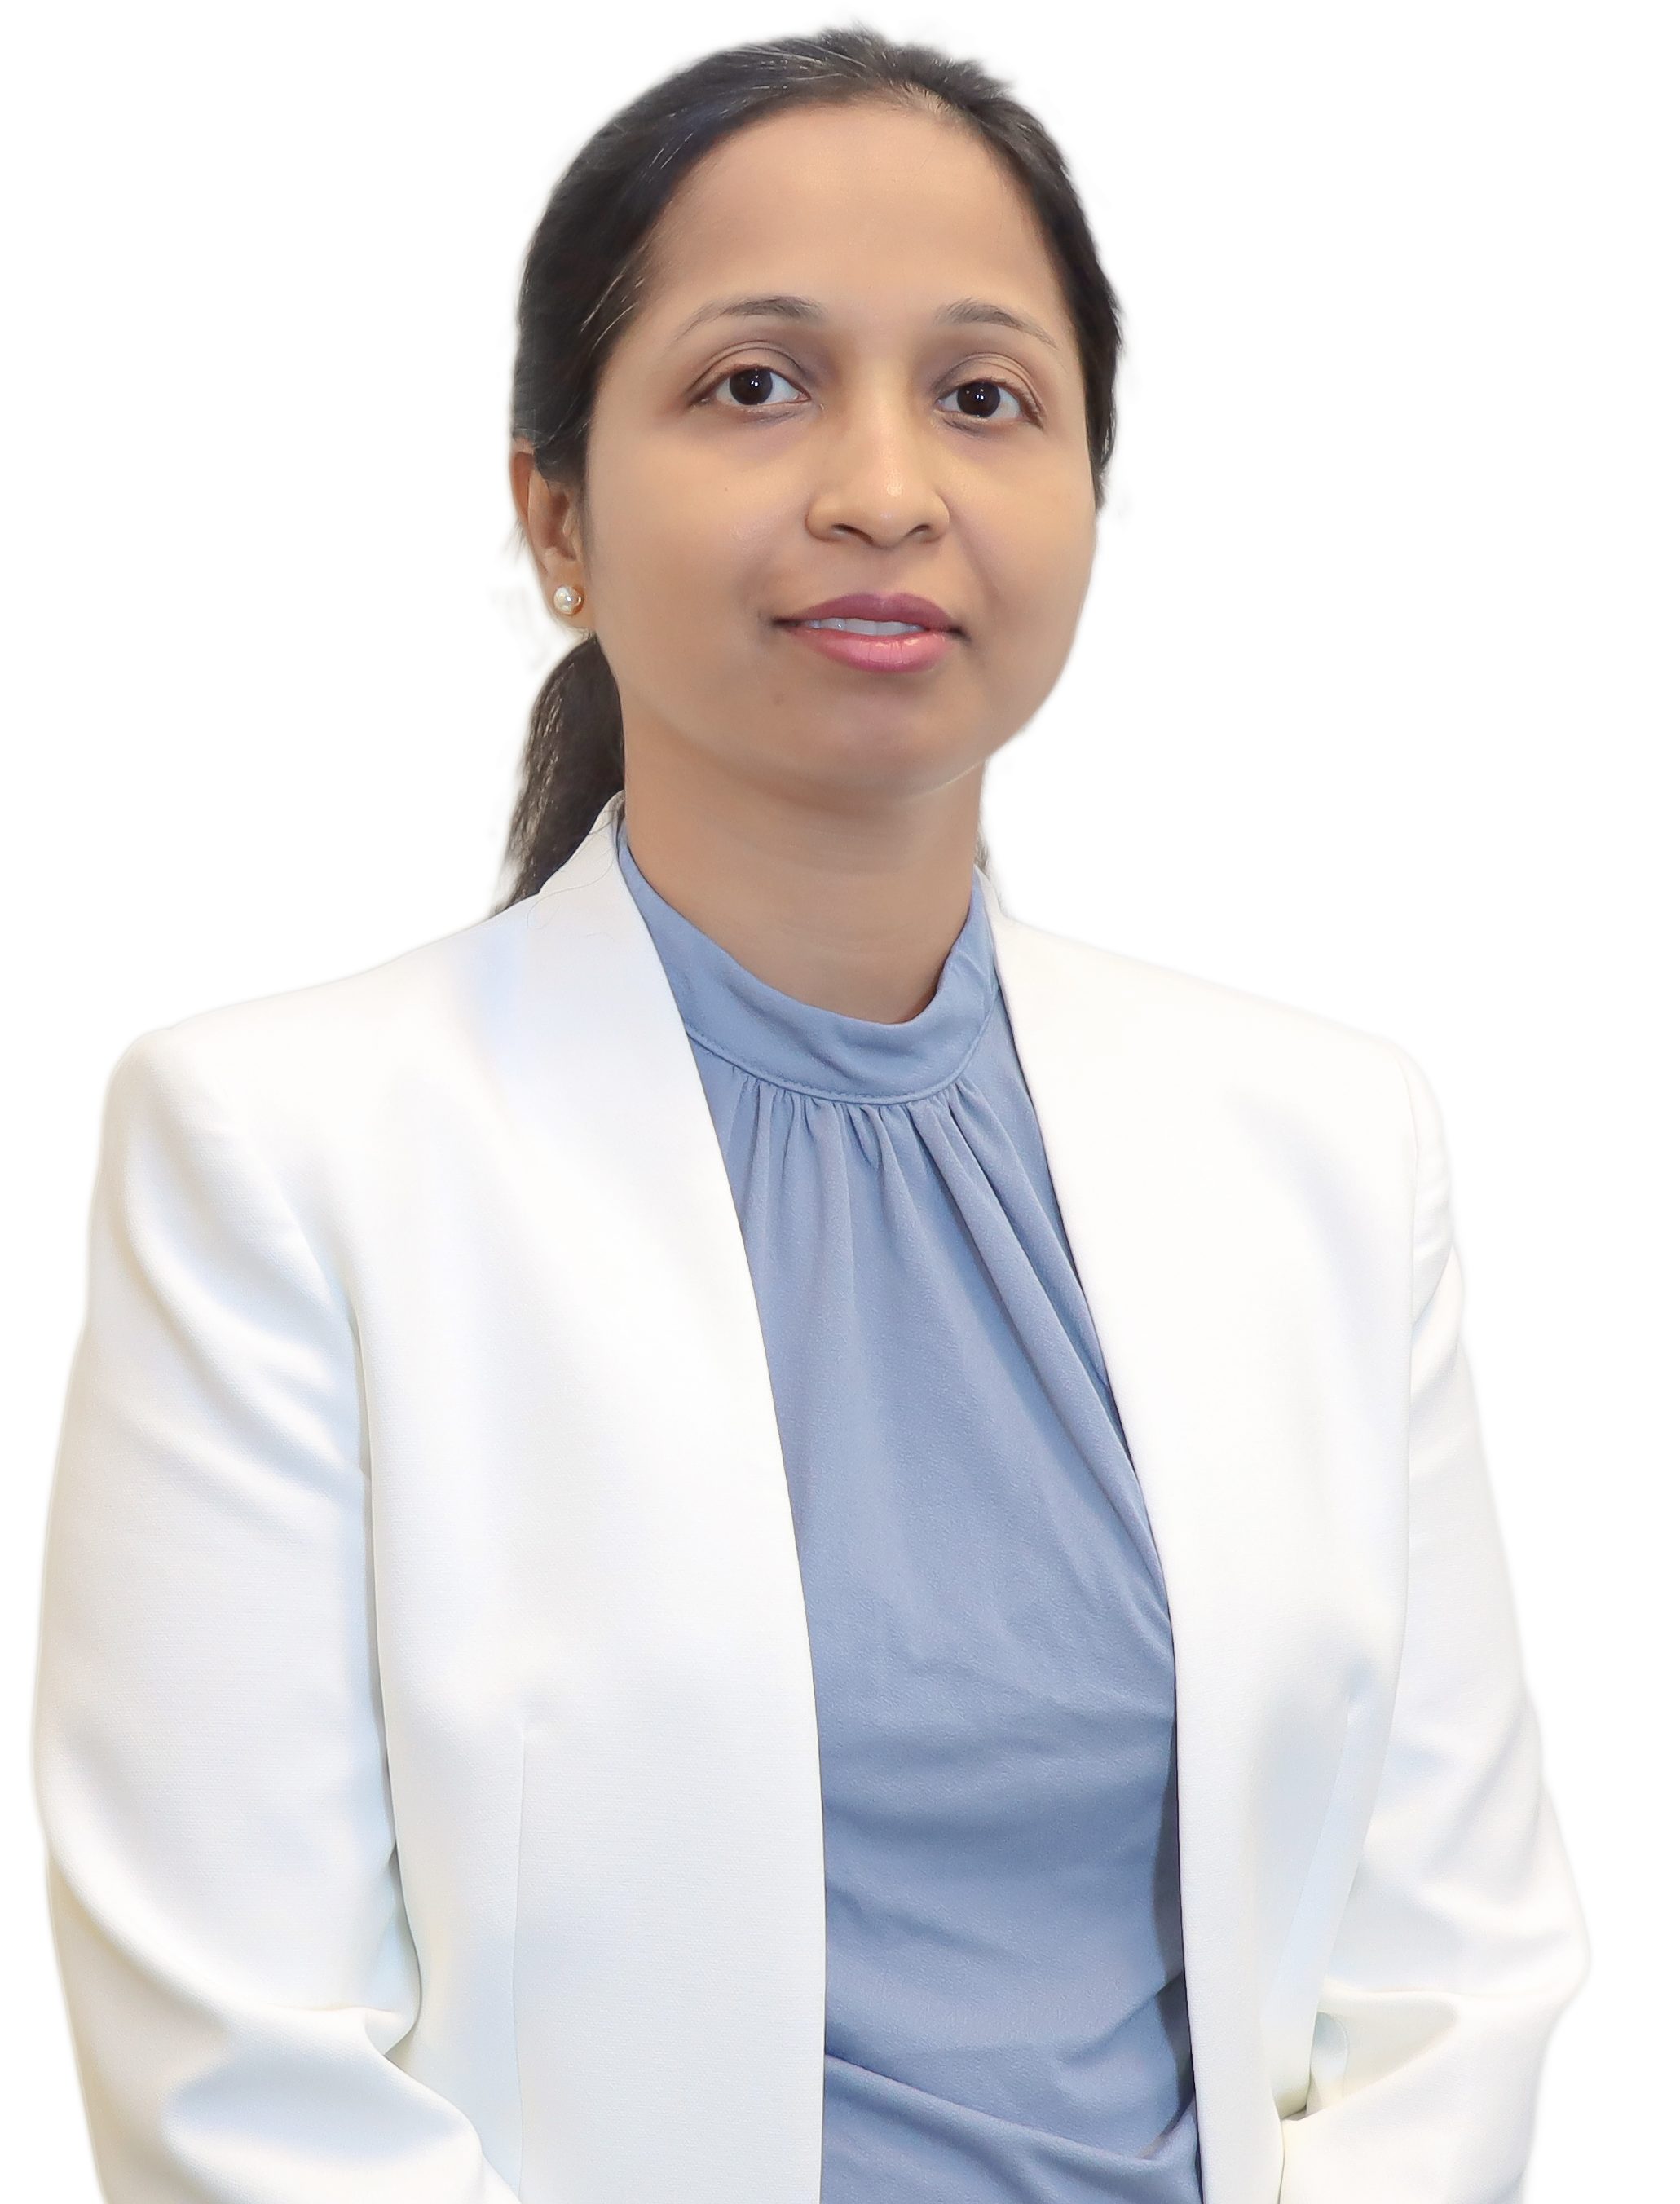 Dr. Kirti Parsi